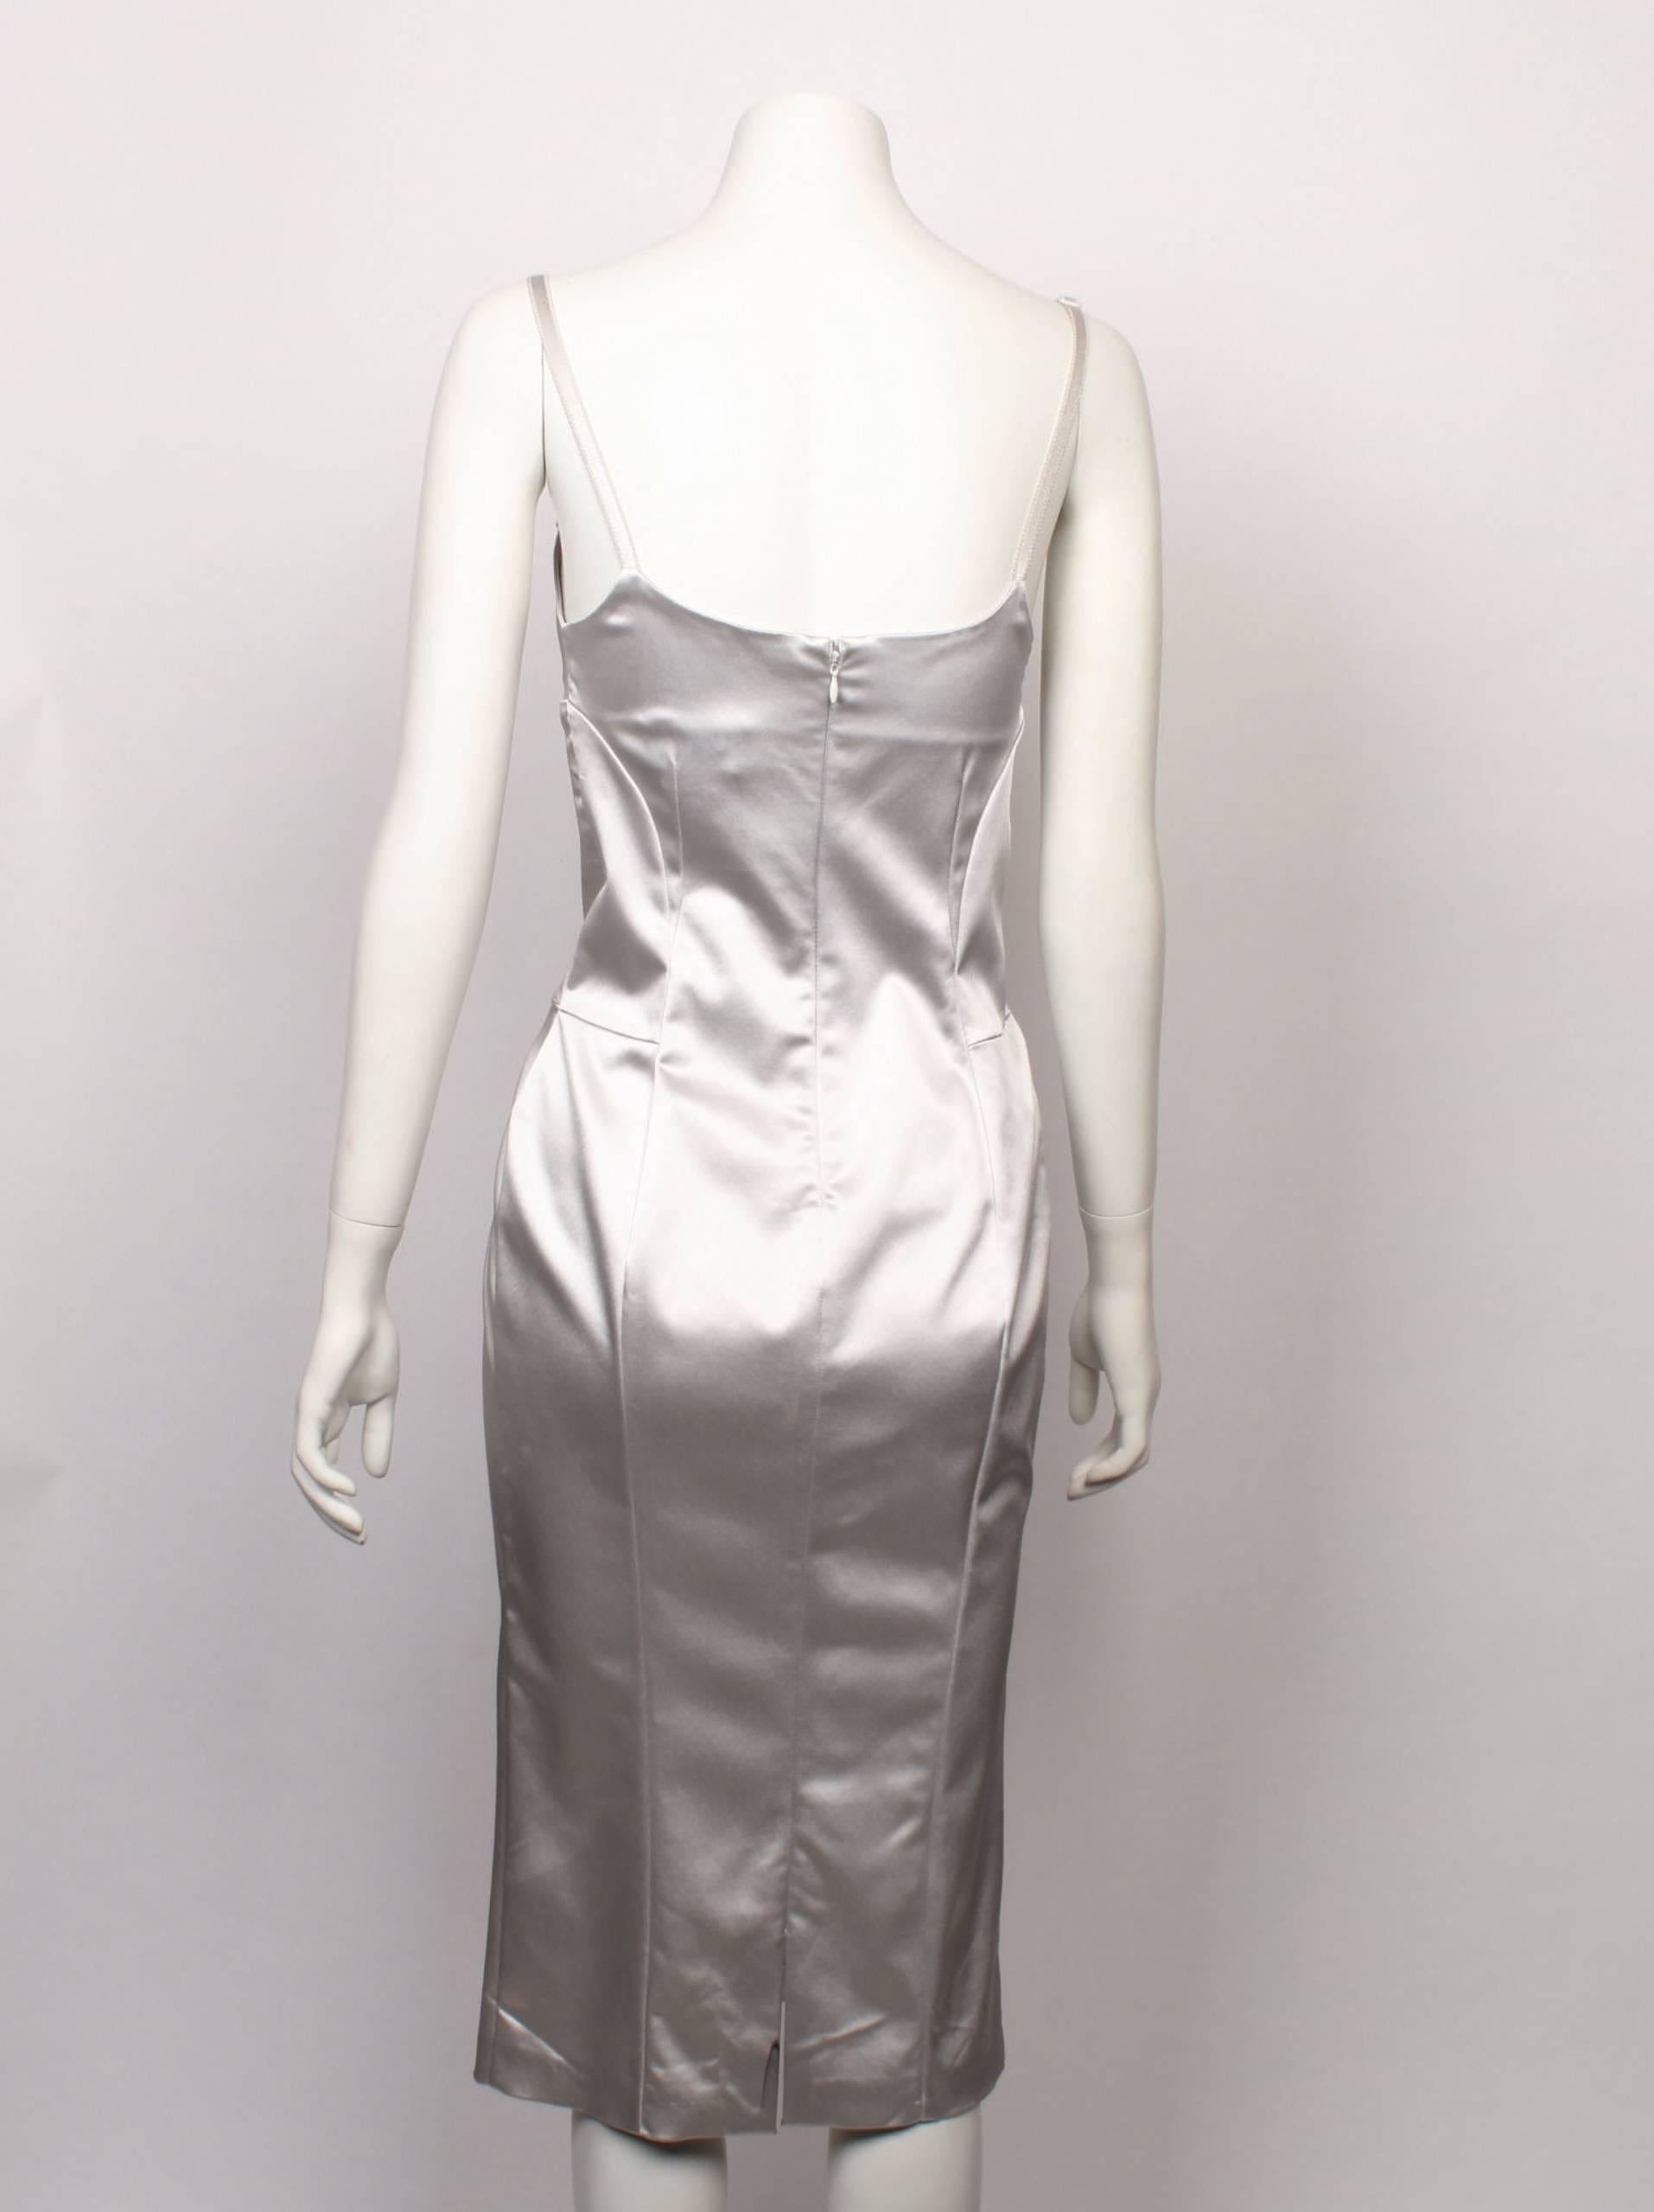 silver satin dress